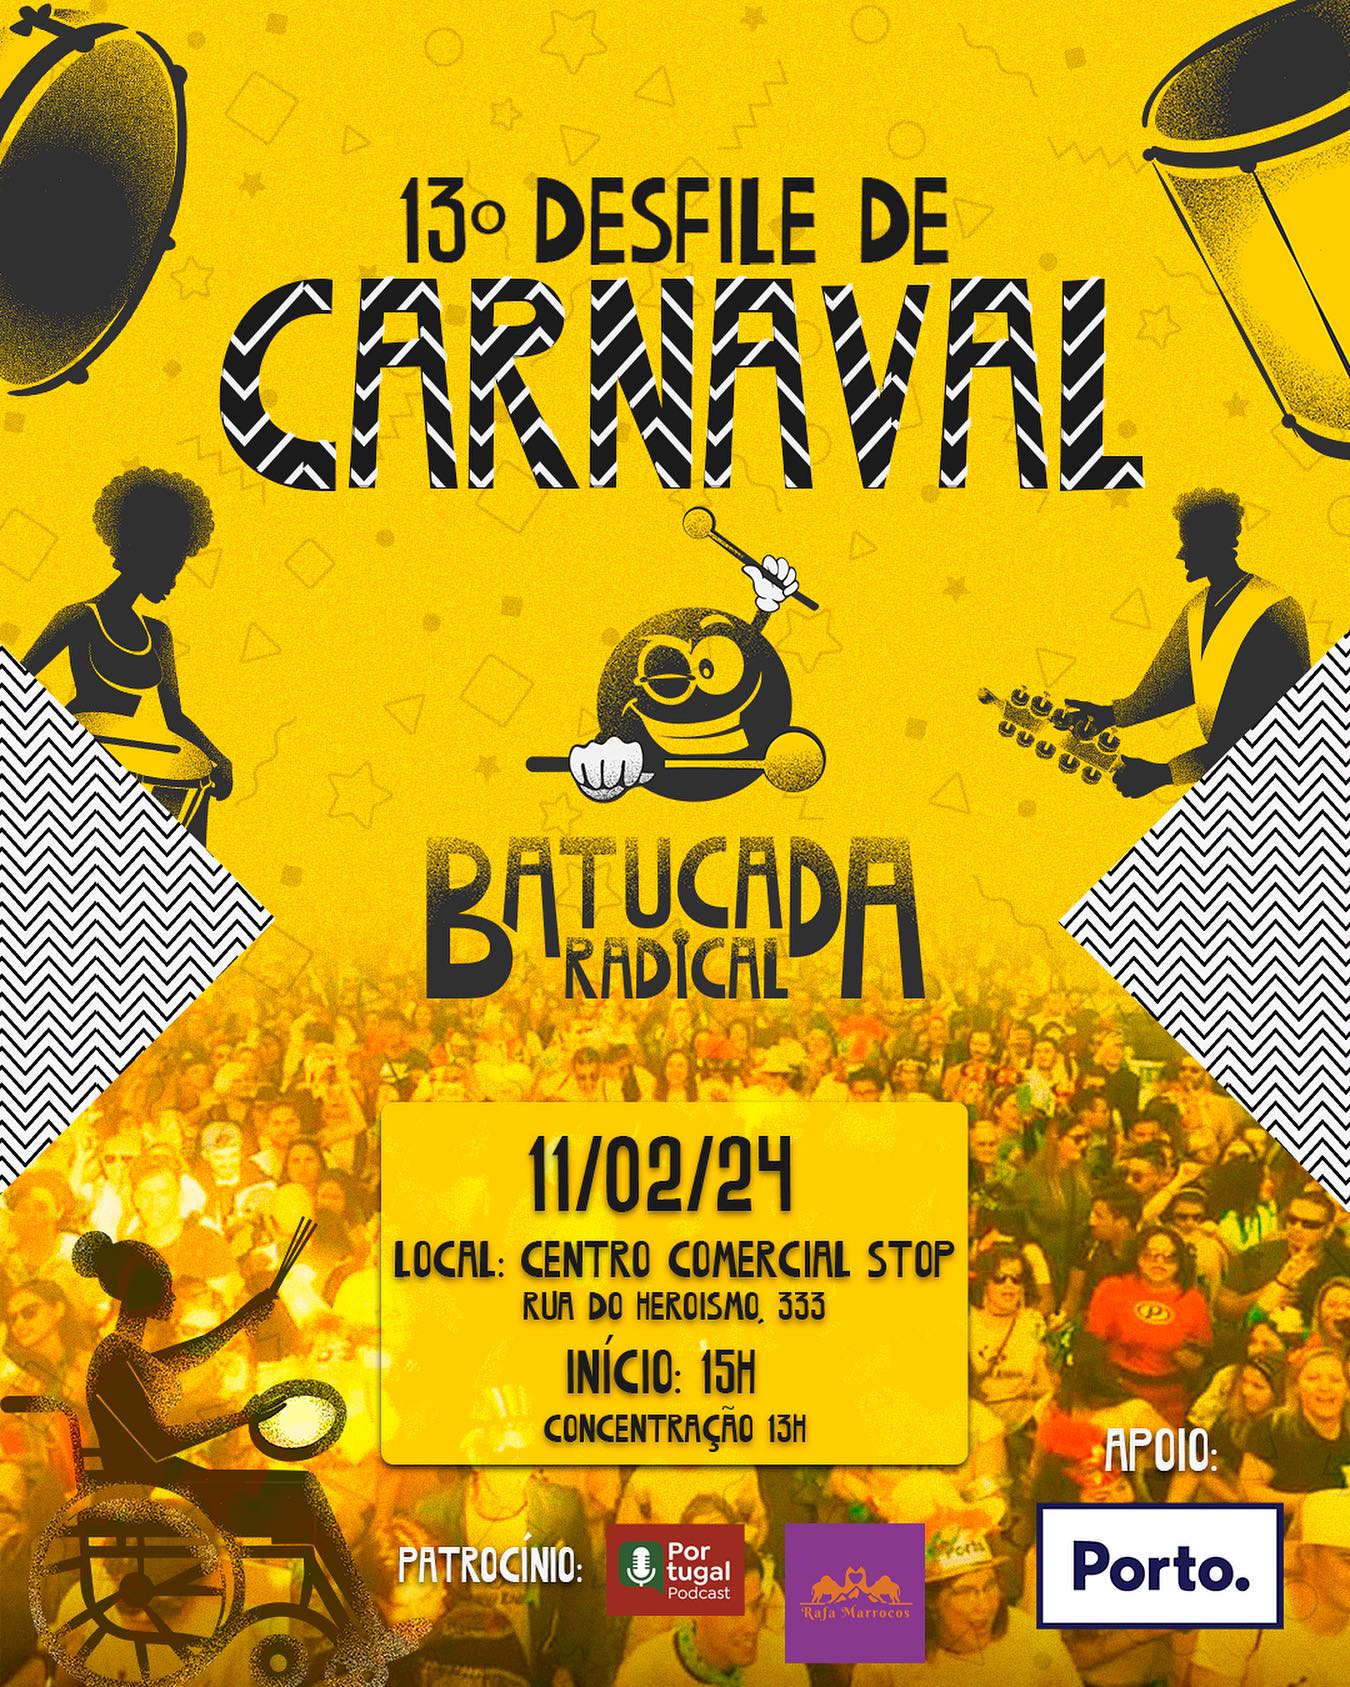 Desfile de Carnaval - Batucada Radical